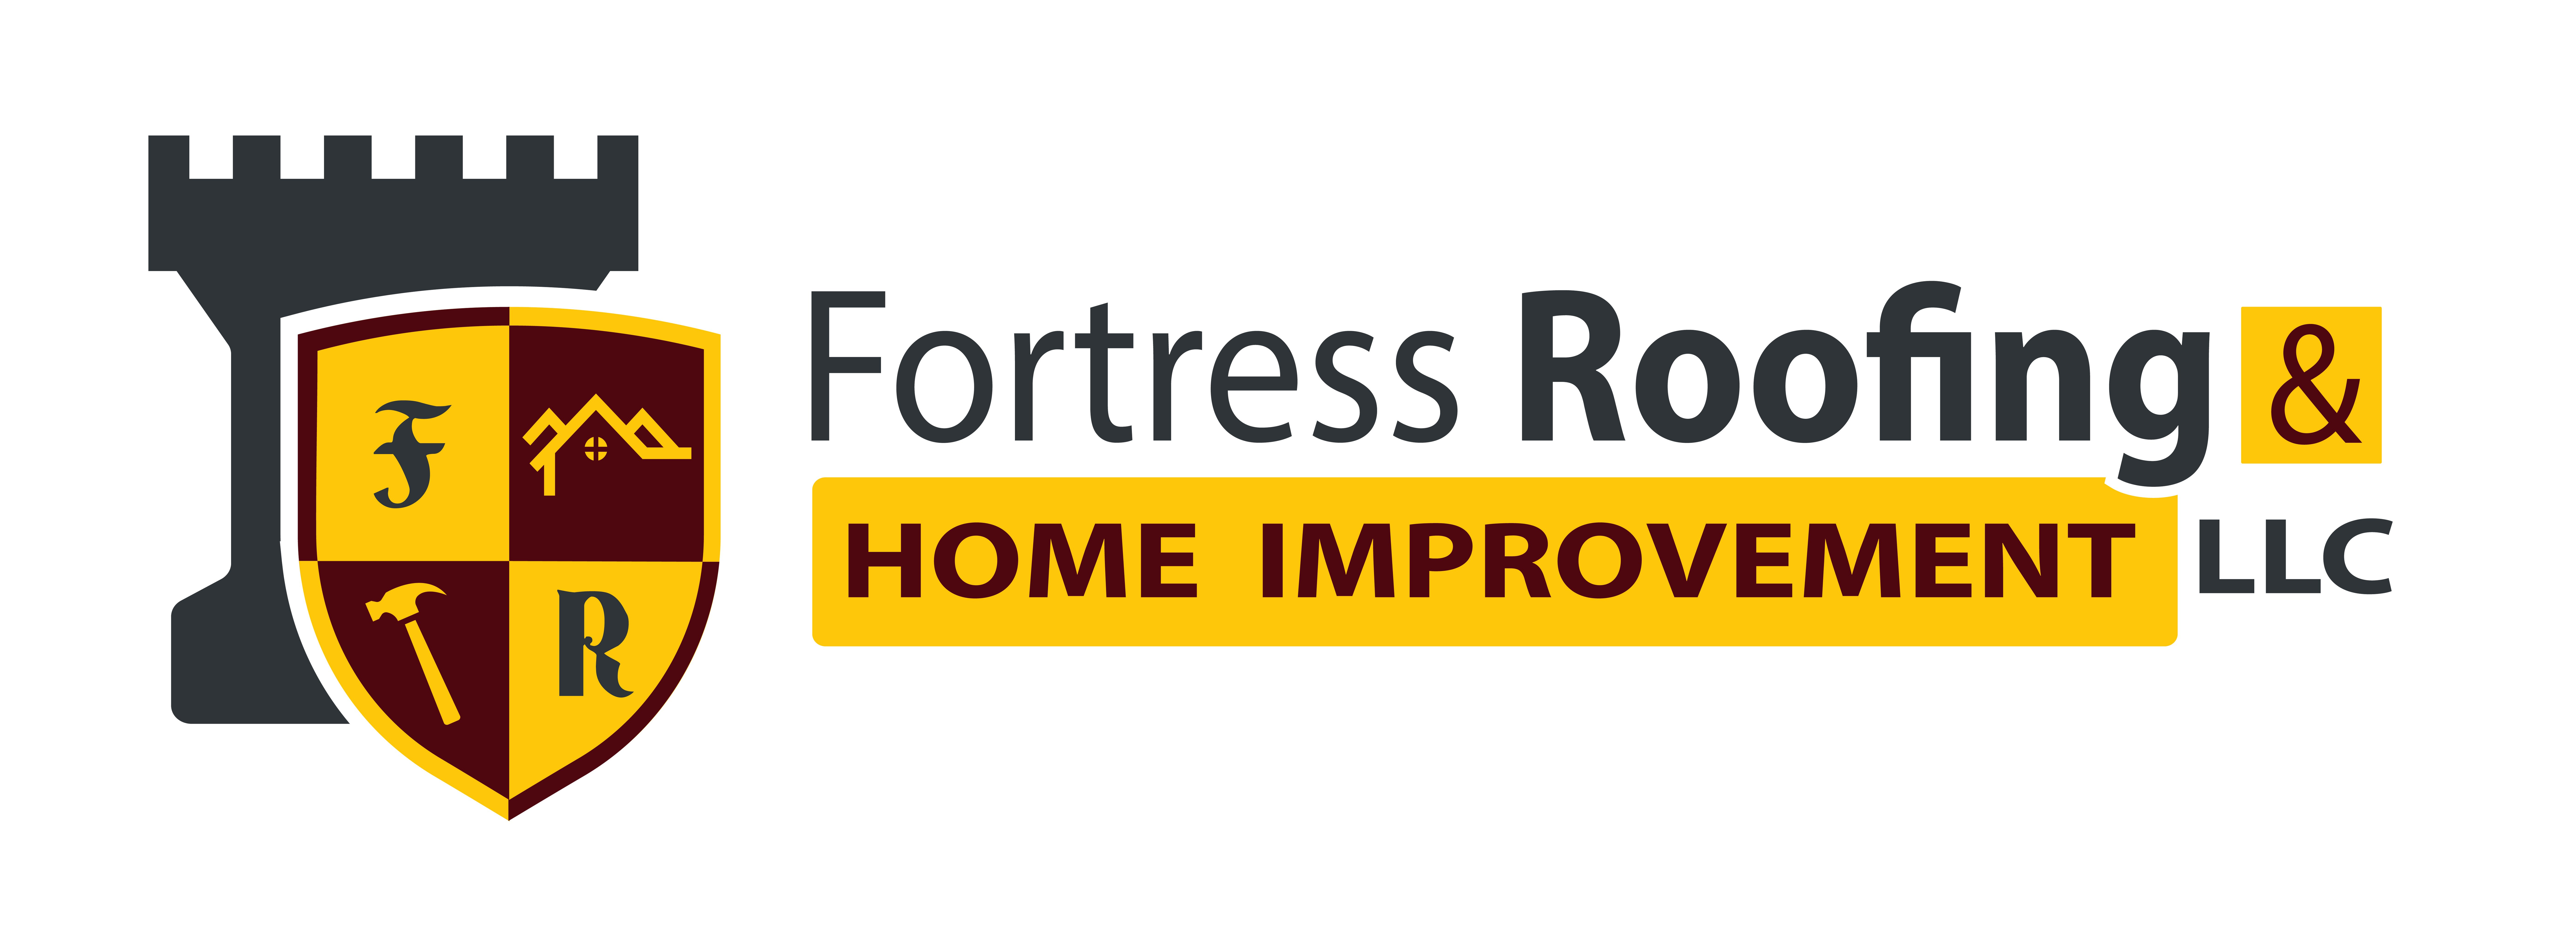 Fortress Roofing & Home Improvement, LLC Logo